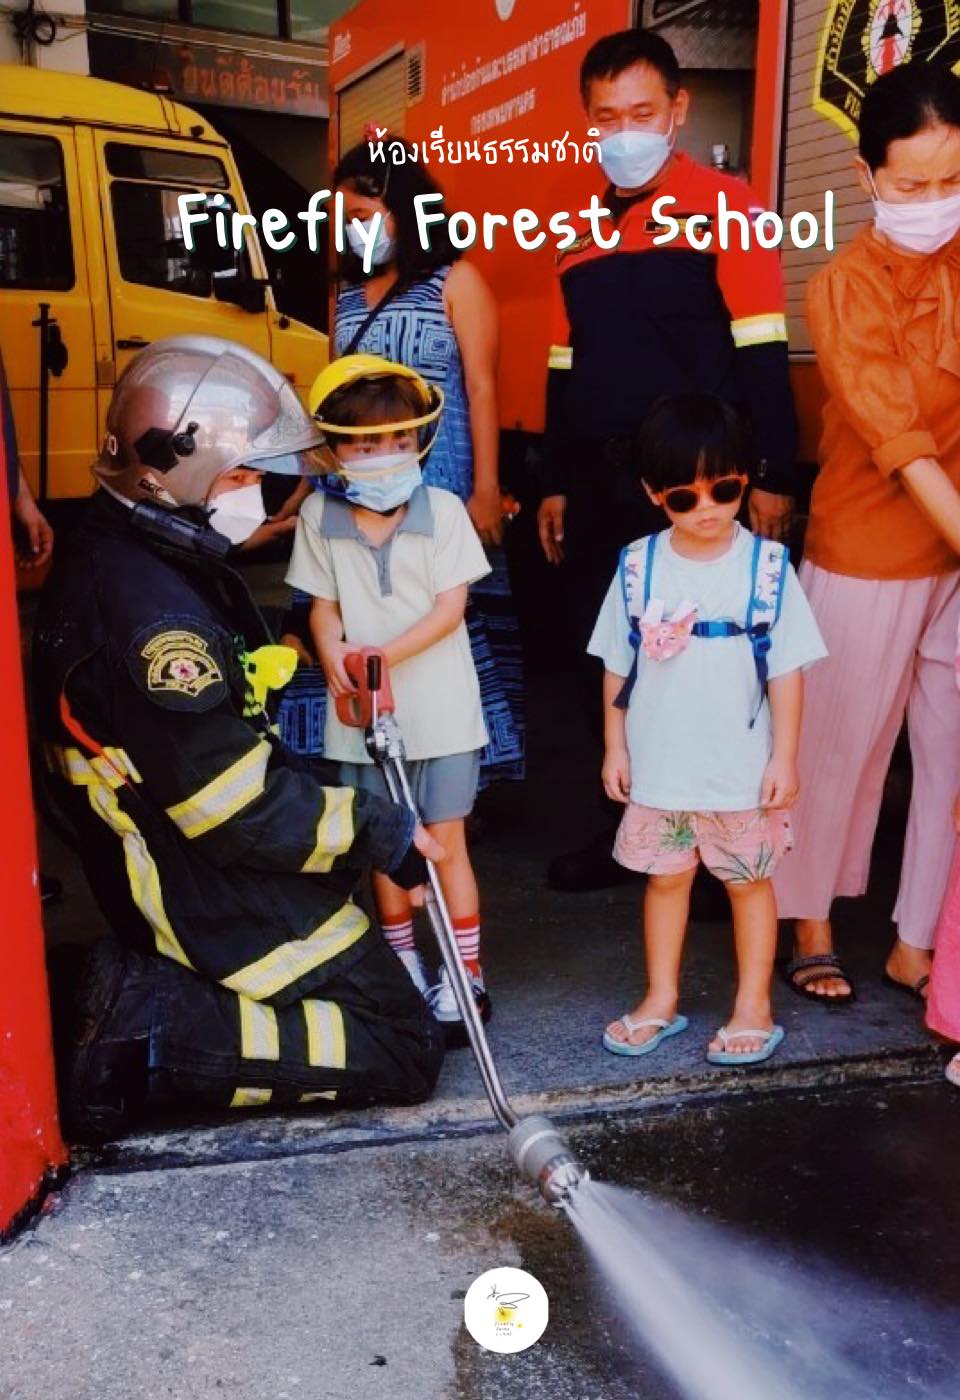 FireFly Forest School